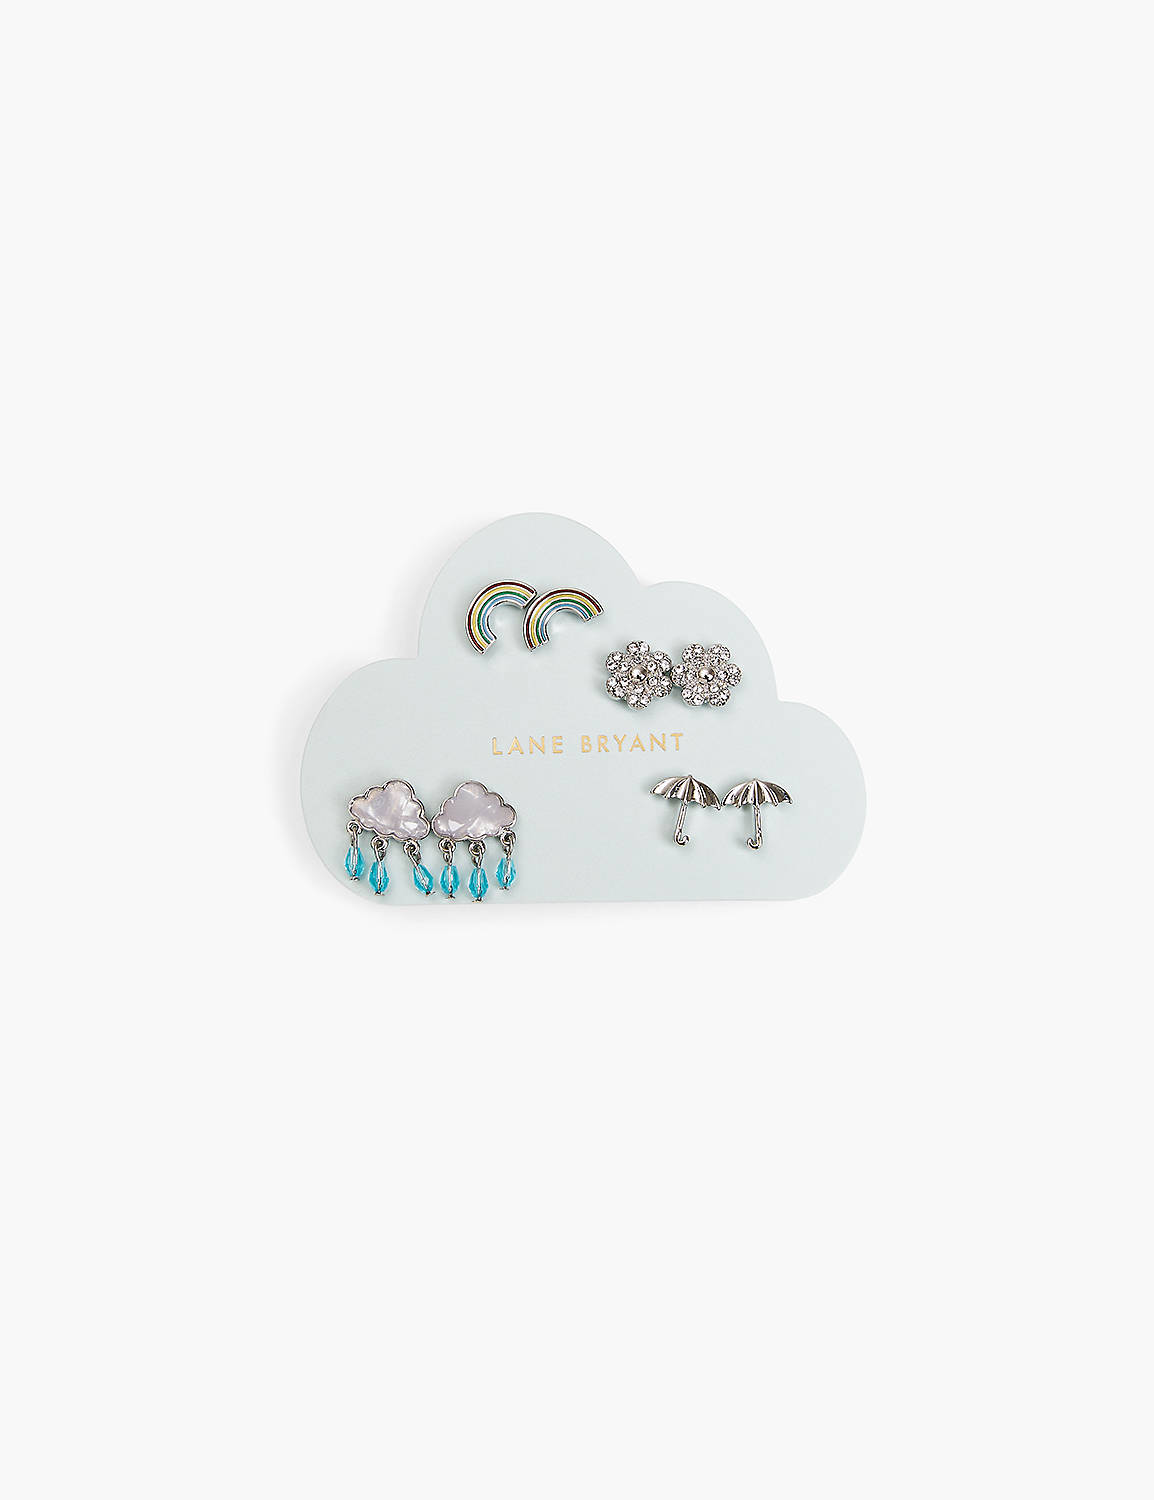 Rain Cloud Earrings - 4 Pack Product Image 1